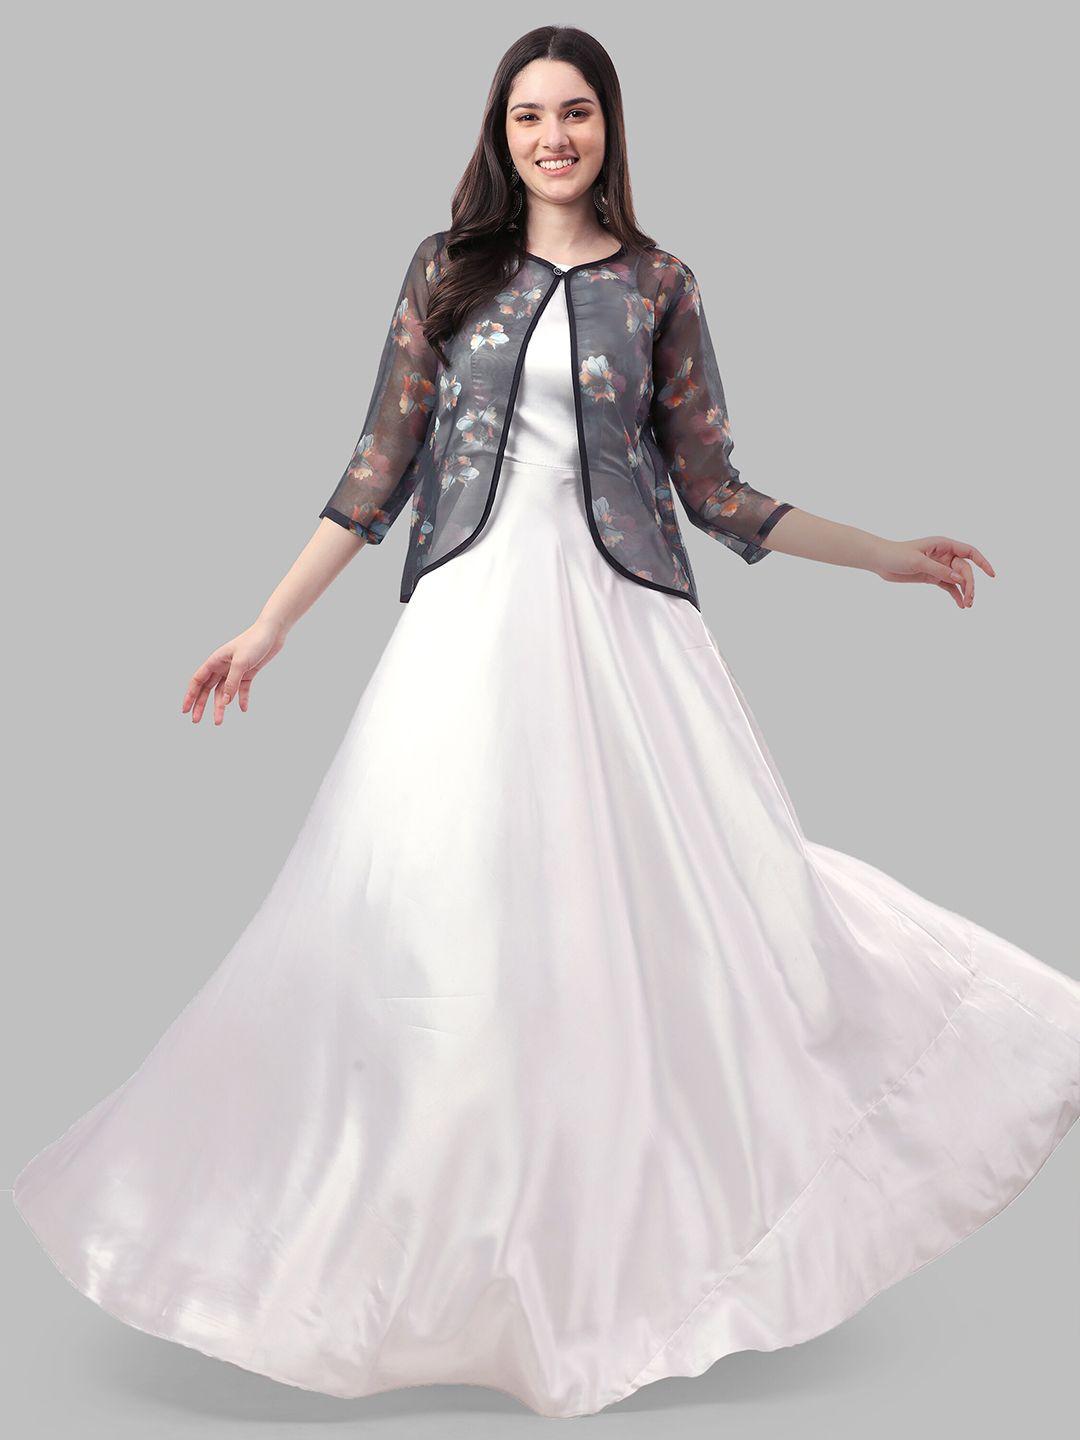 aspora sleeveless maxi fit & flare dress with jacket